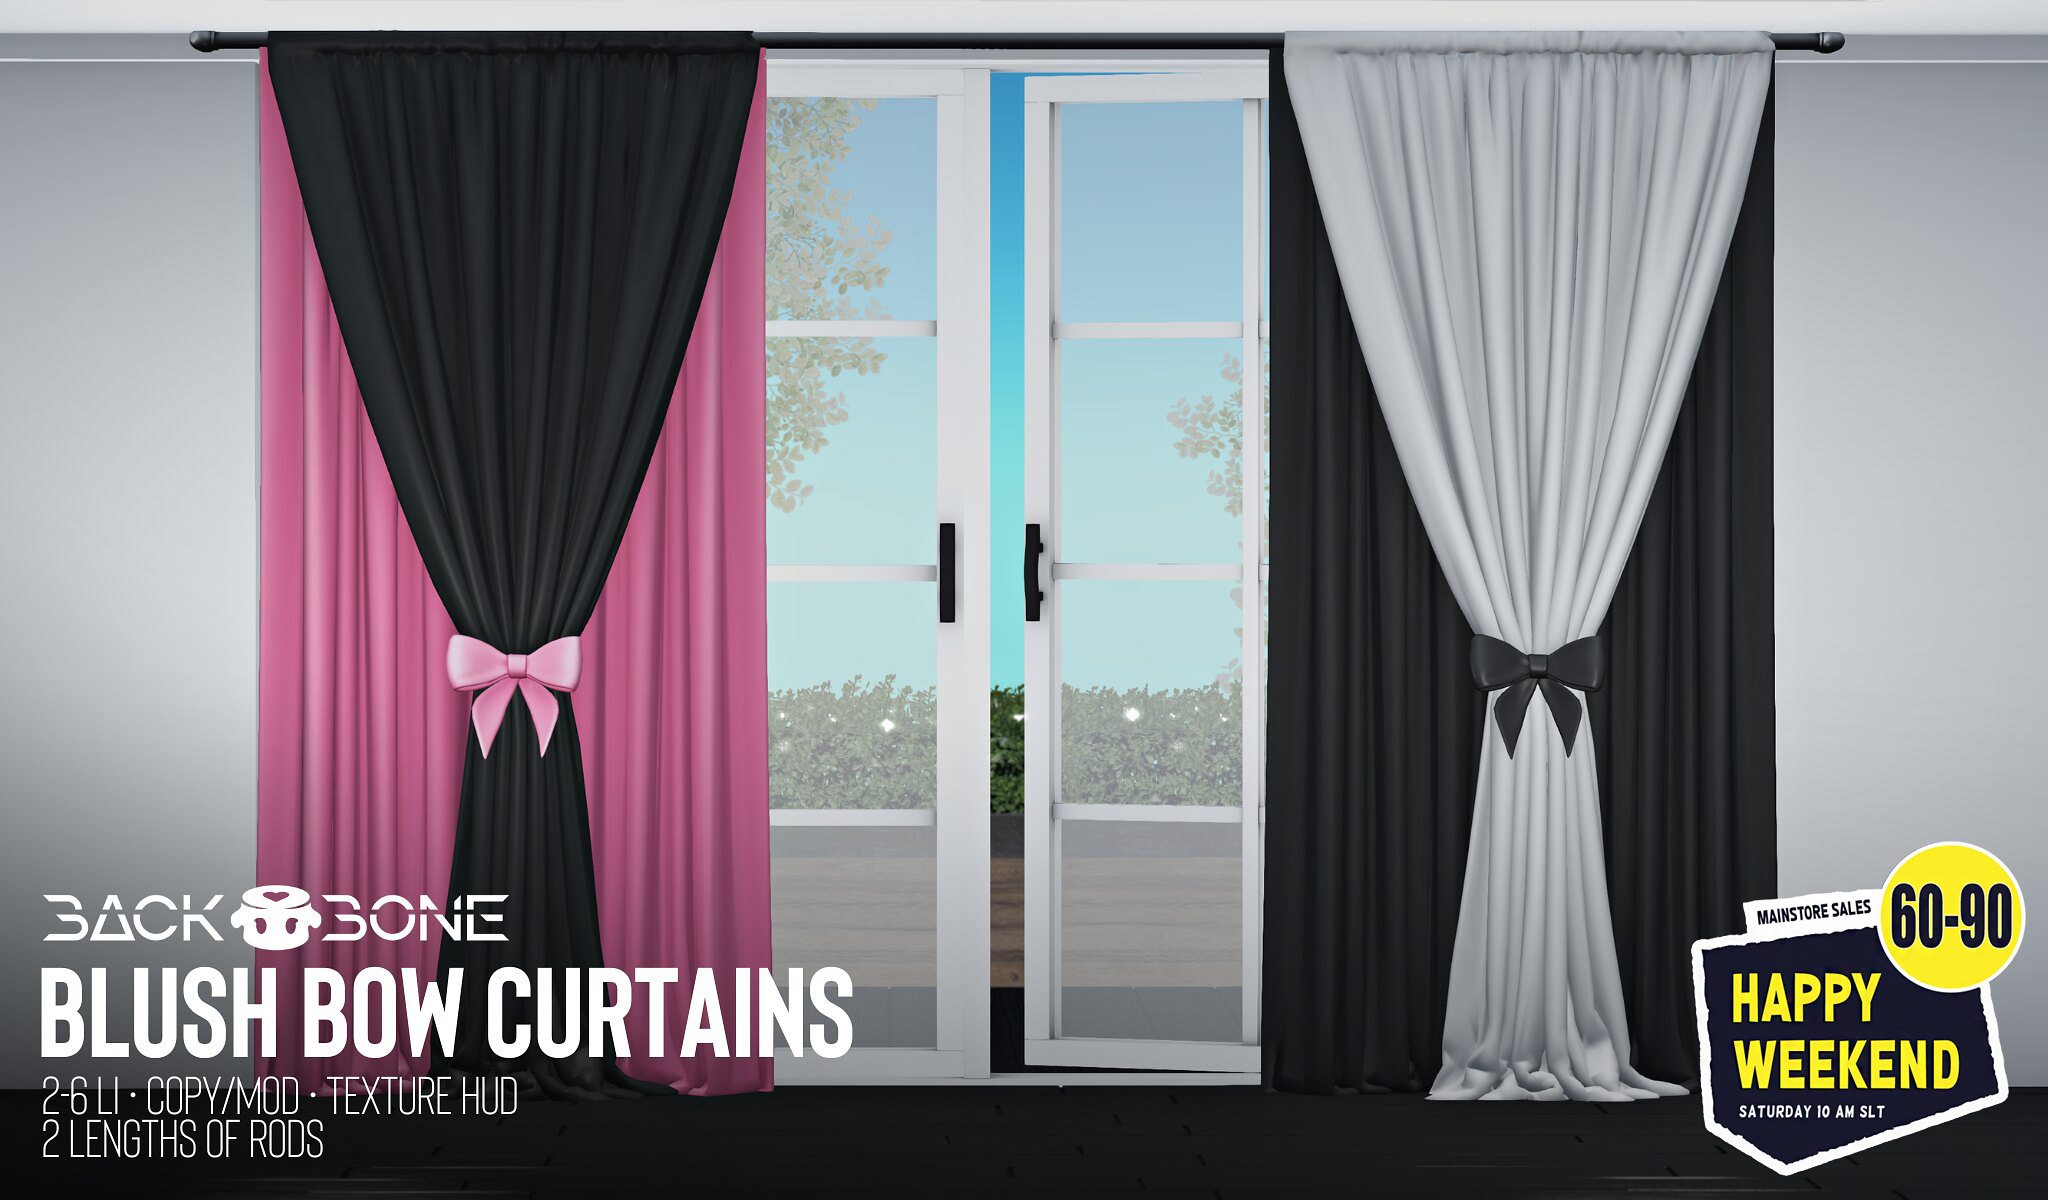 BackBone – Blush Bow Curtains